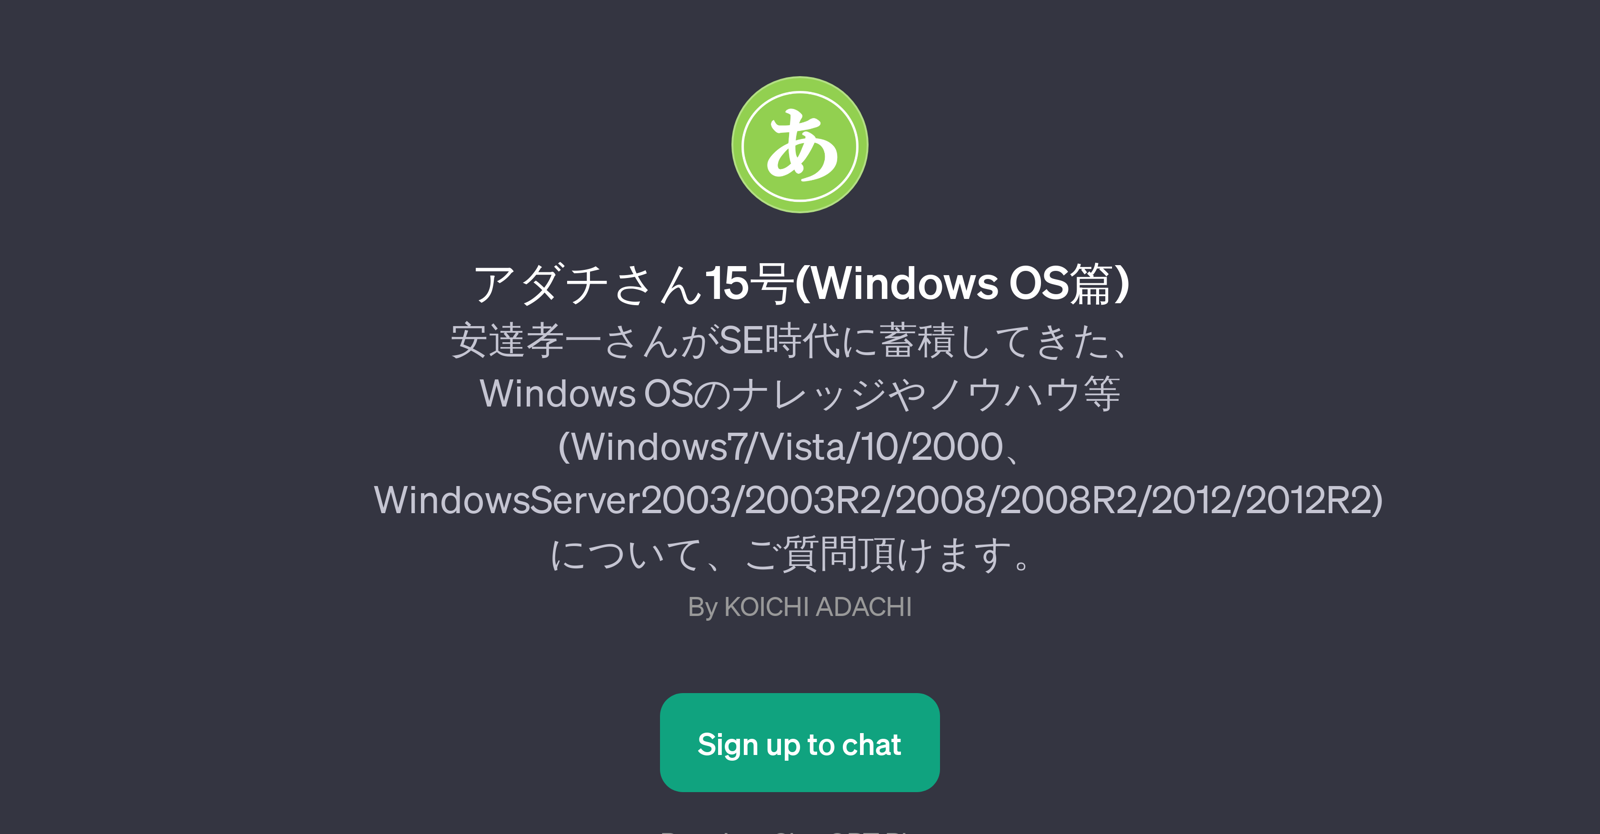 15(Windows OS) website